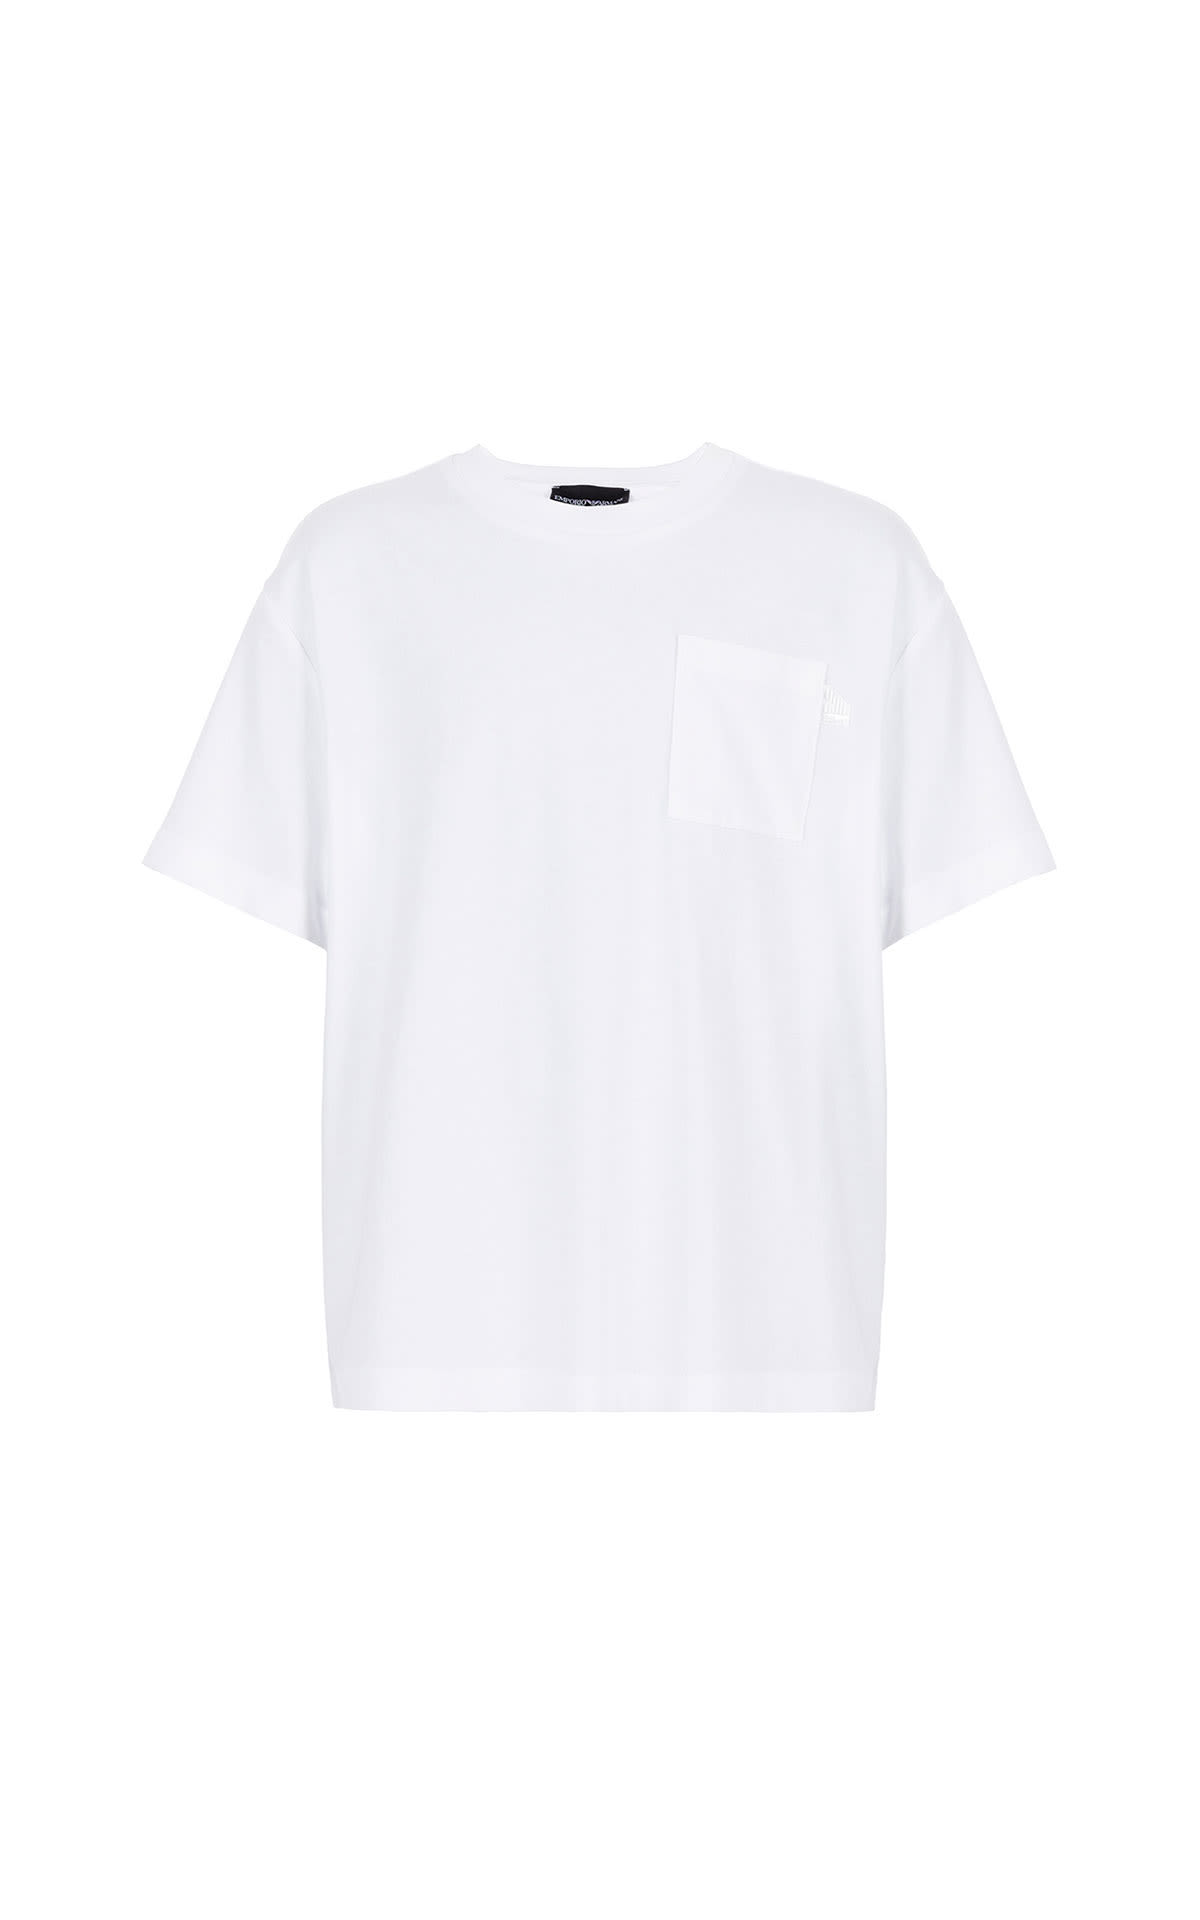 Camiseta blanca para hombre Armani